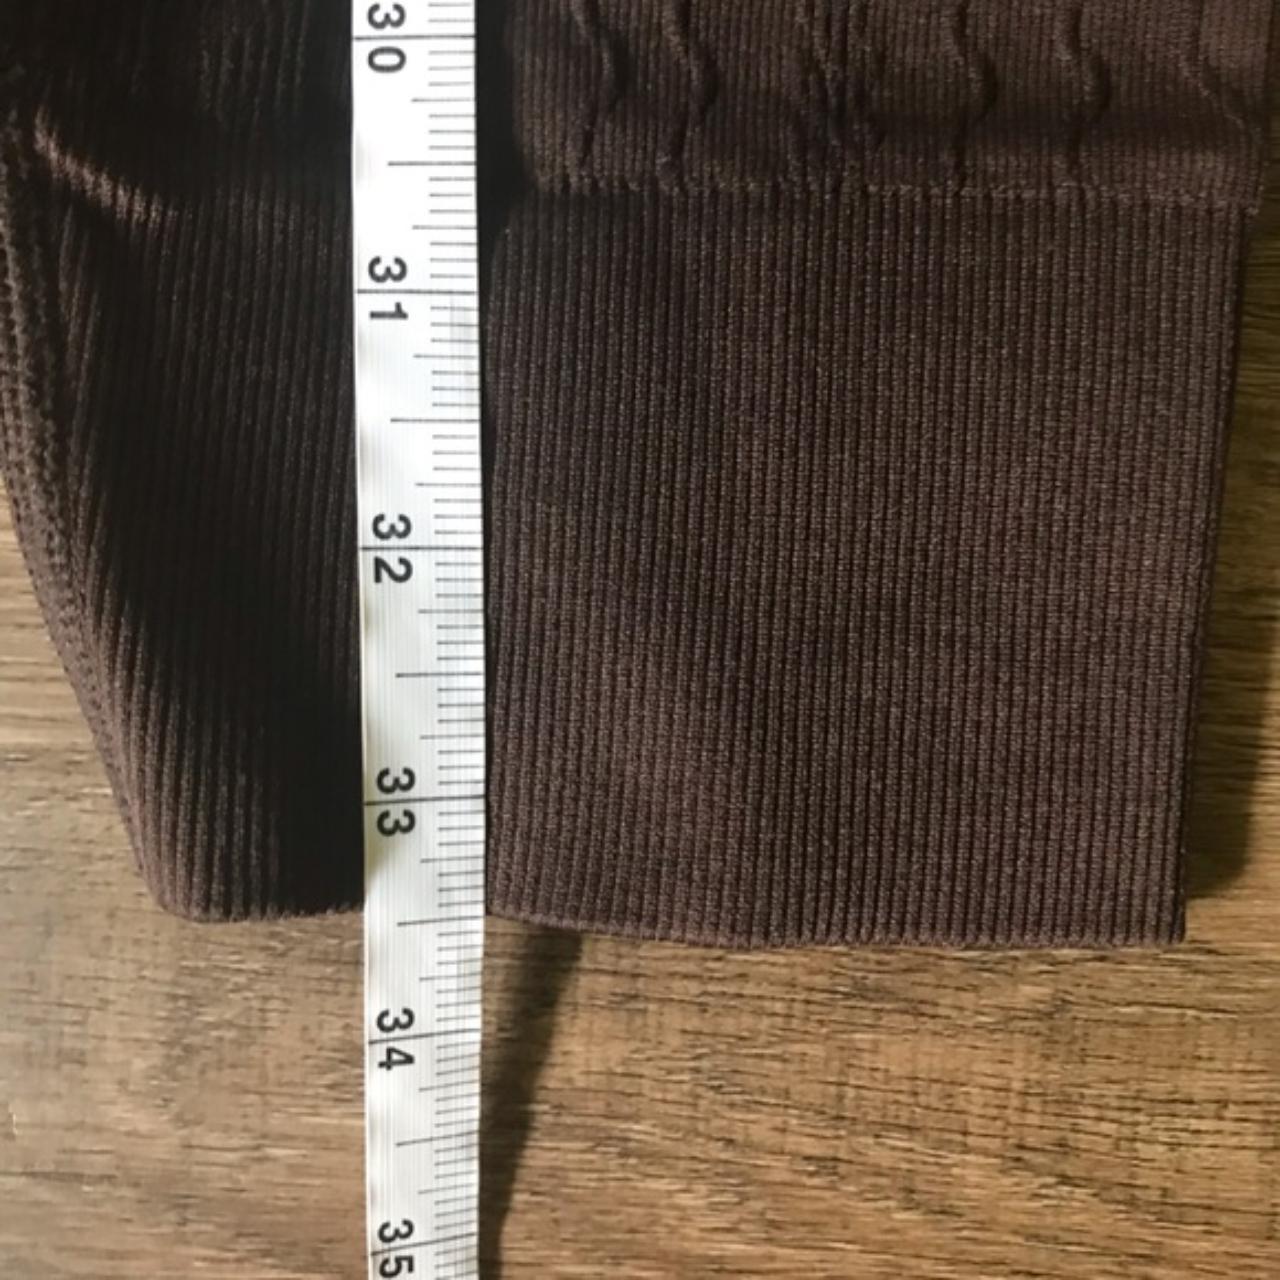 Joy Lab brown high rise knit leggings in perfect - Depop